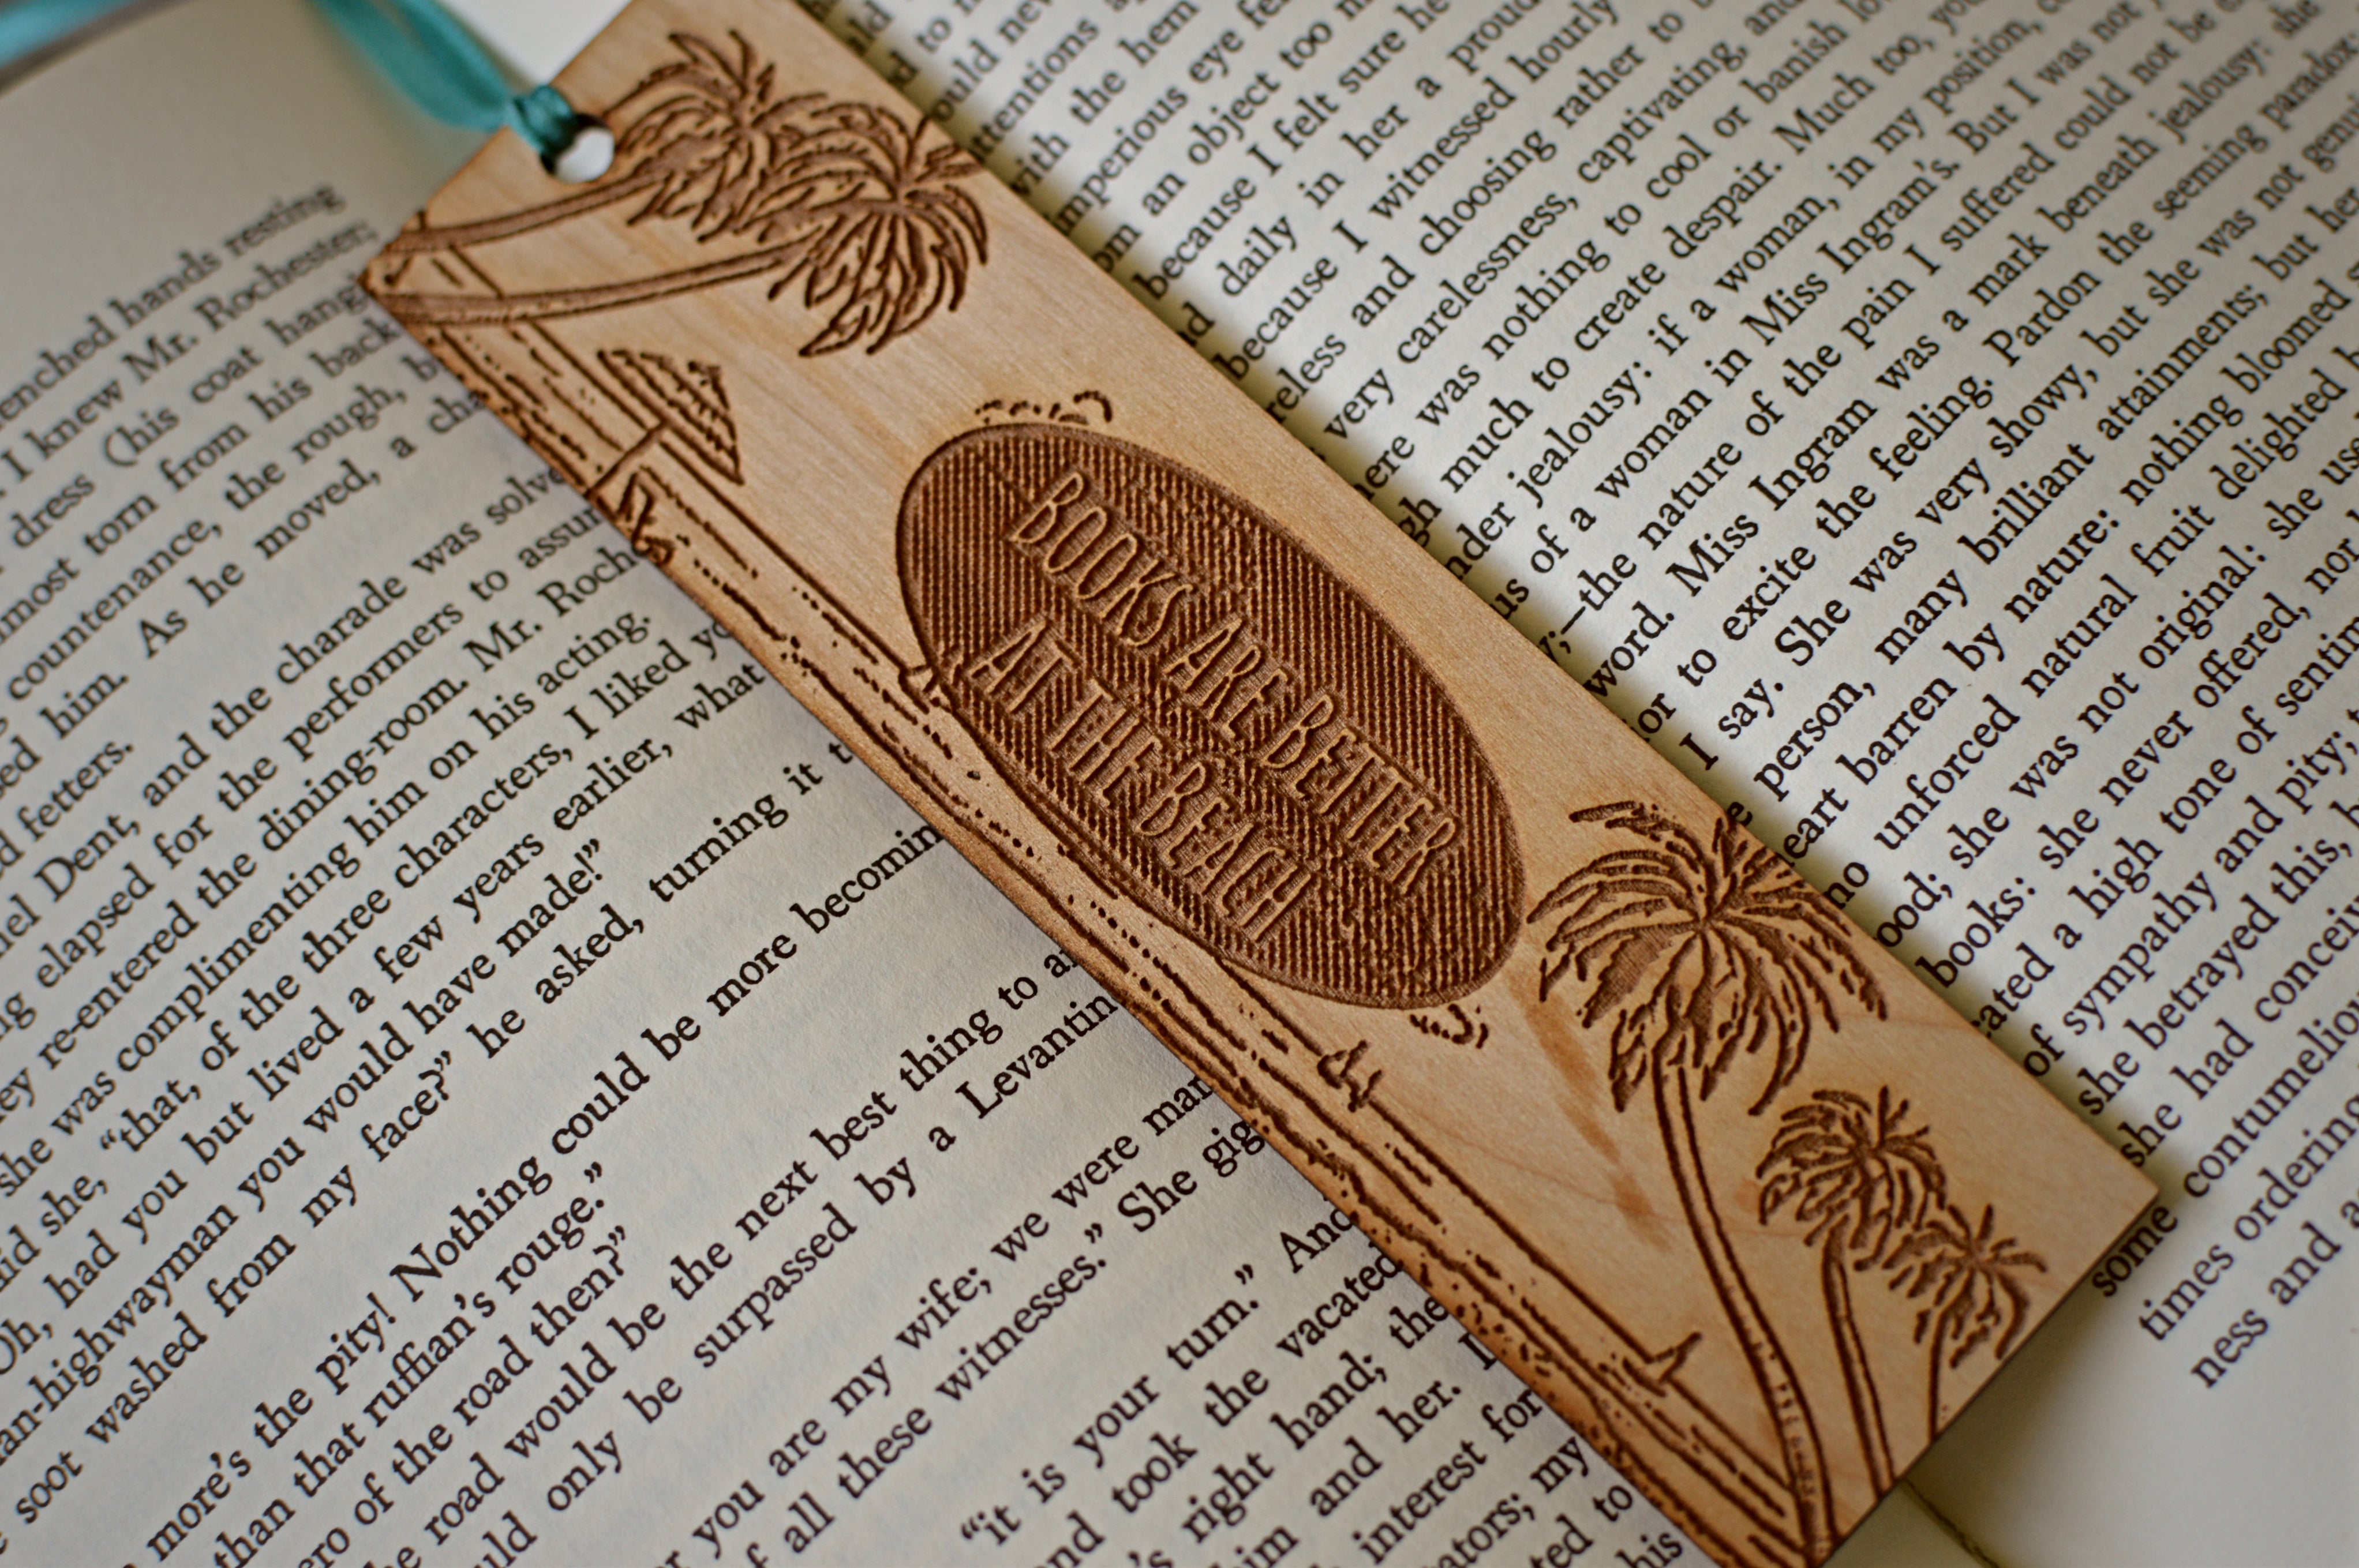 Adventure awaits wooden bookmark